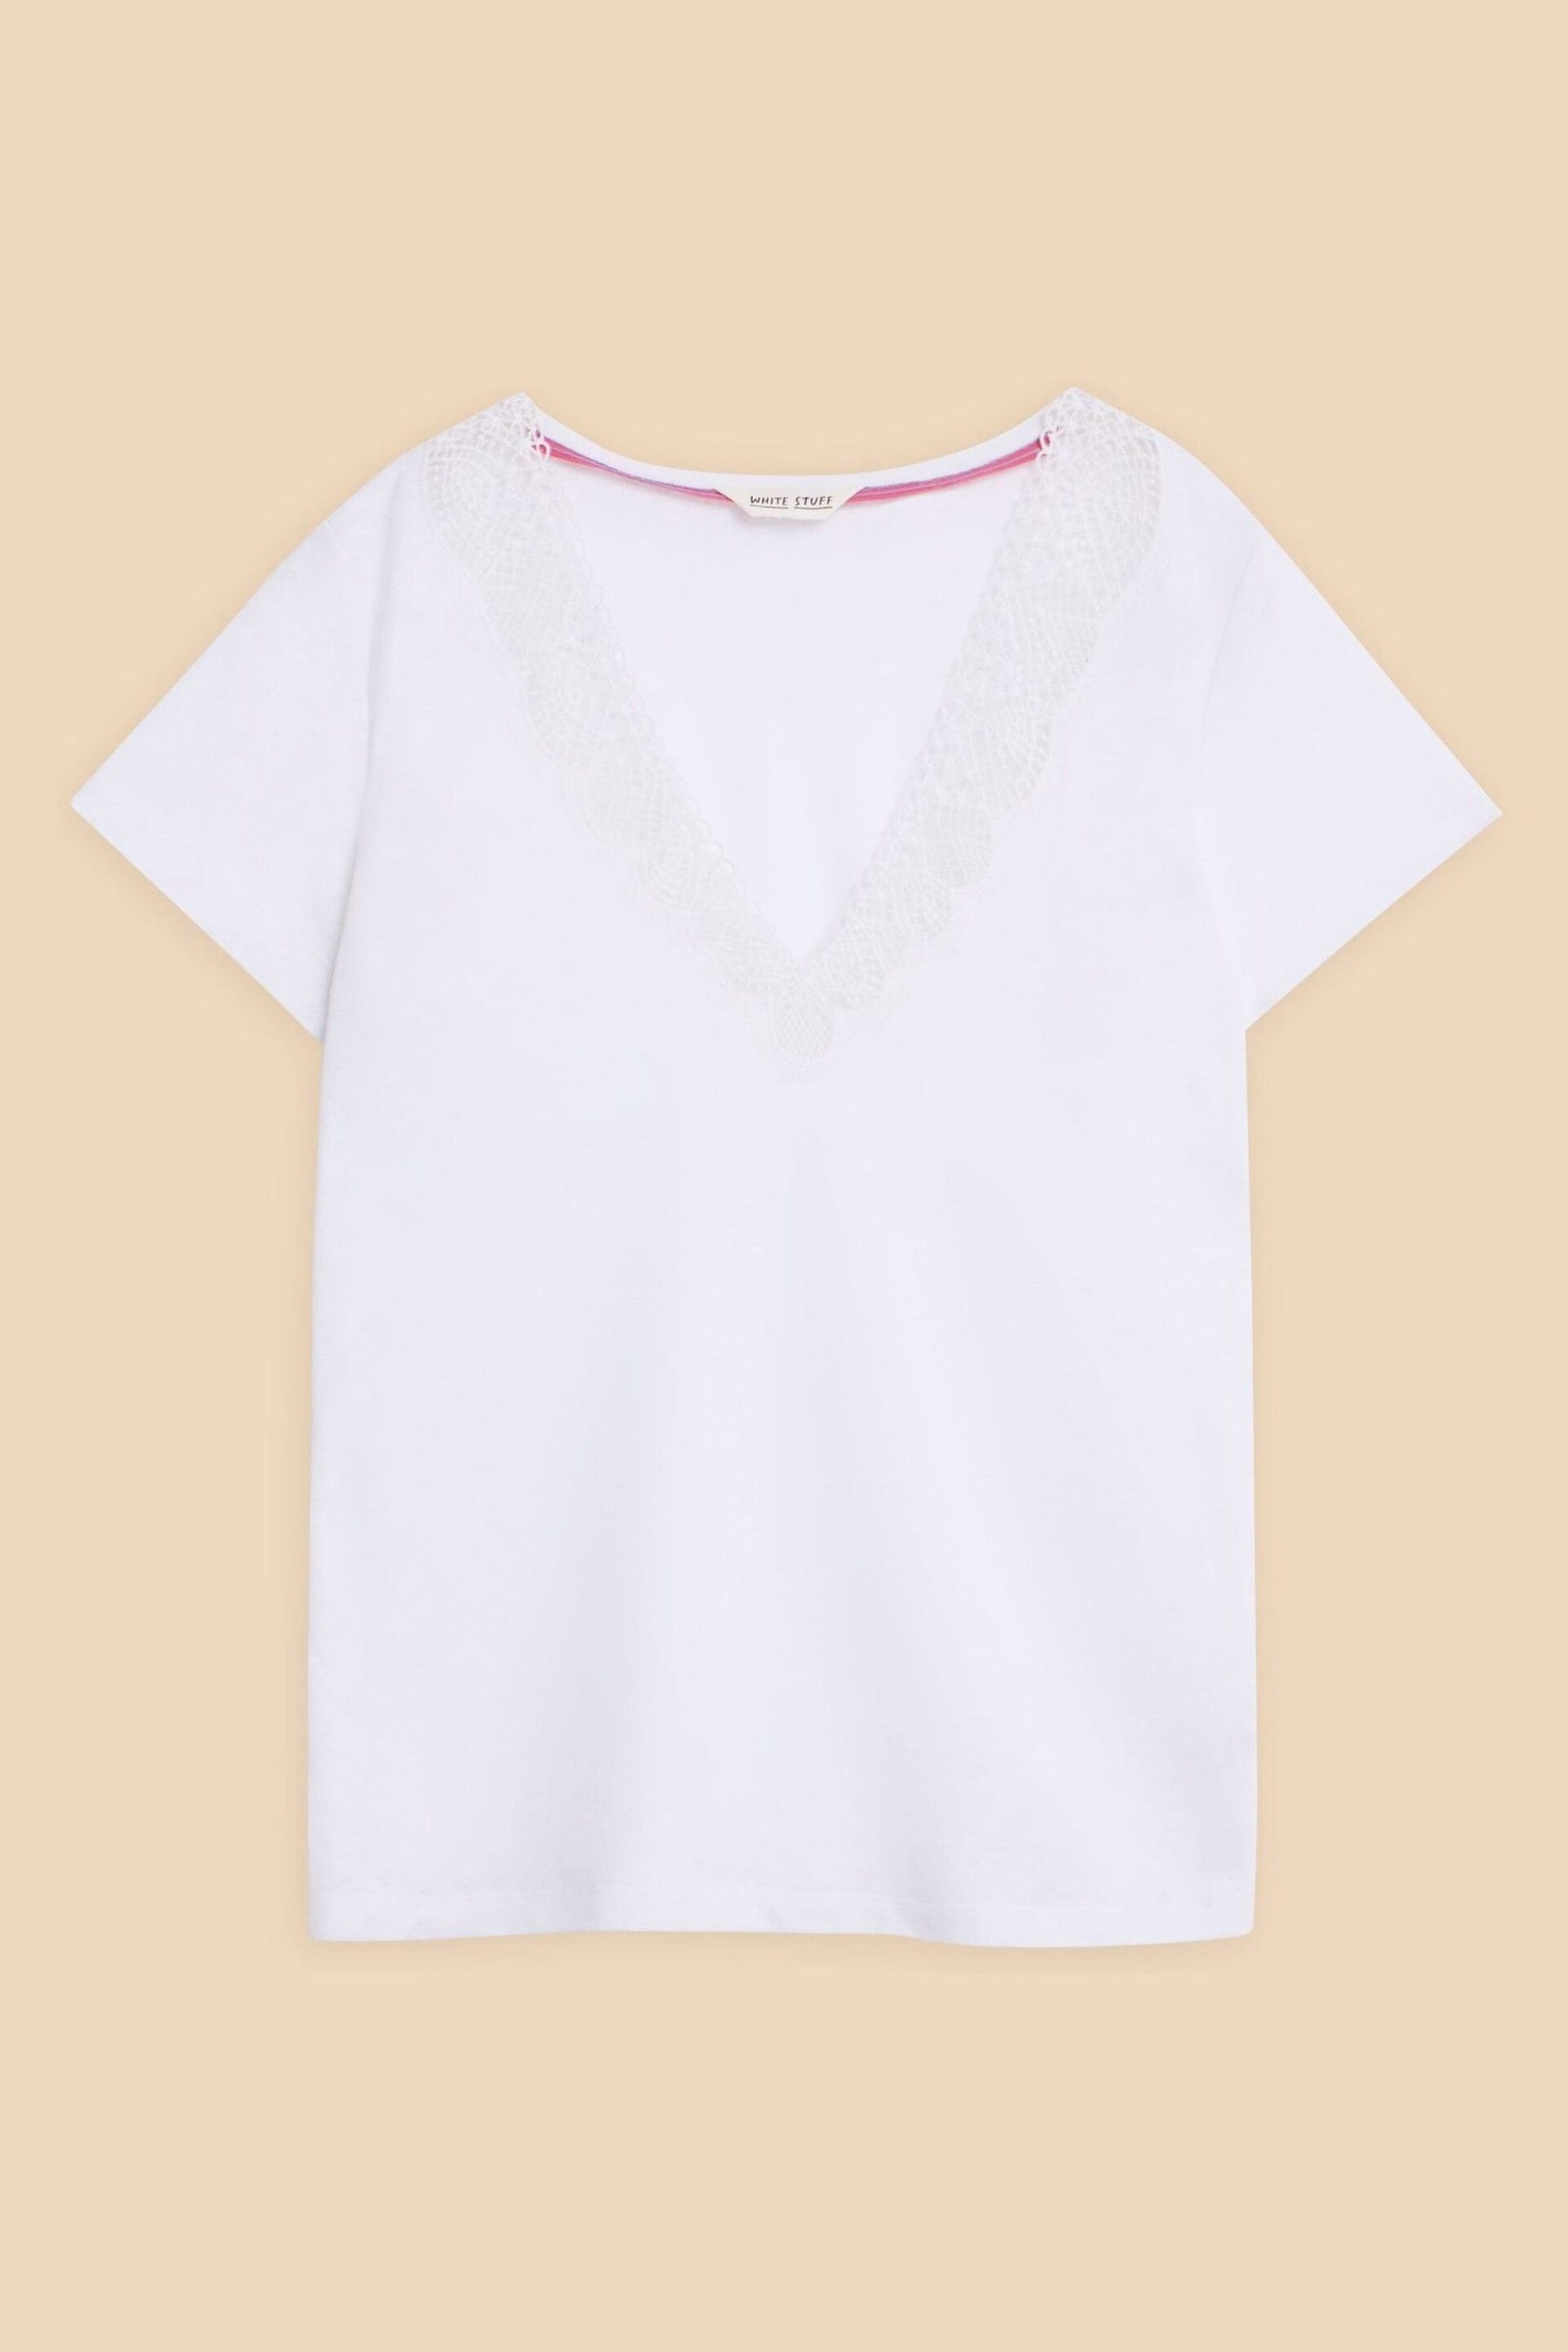 White Stuff White Lace Ellie T-Shirt - Image 5 of 7